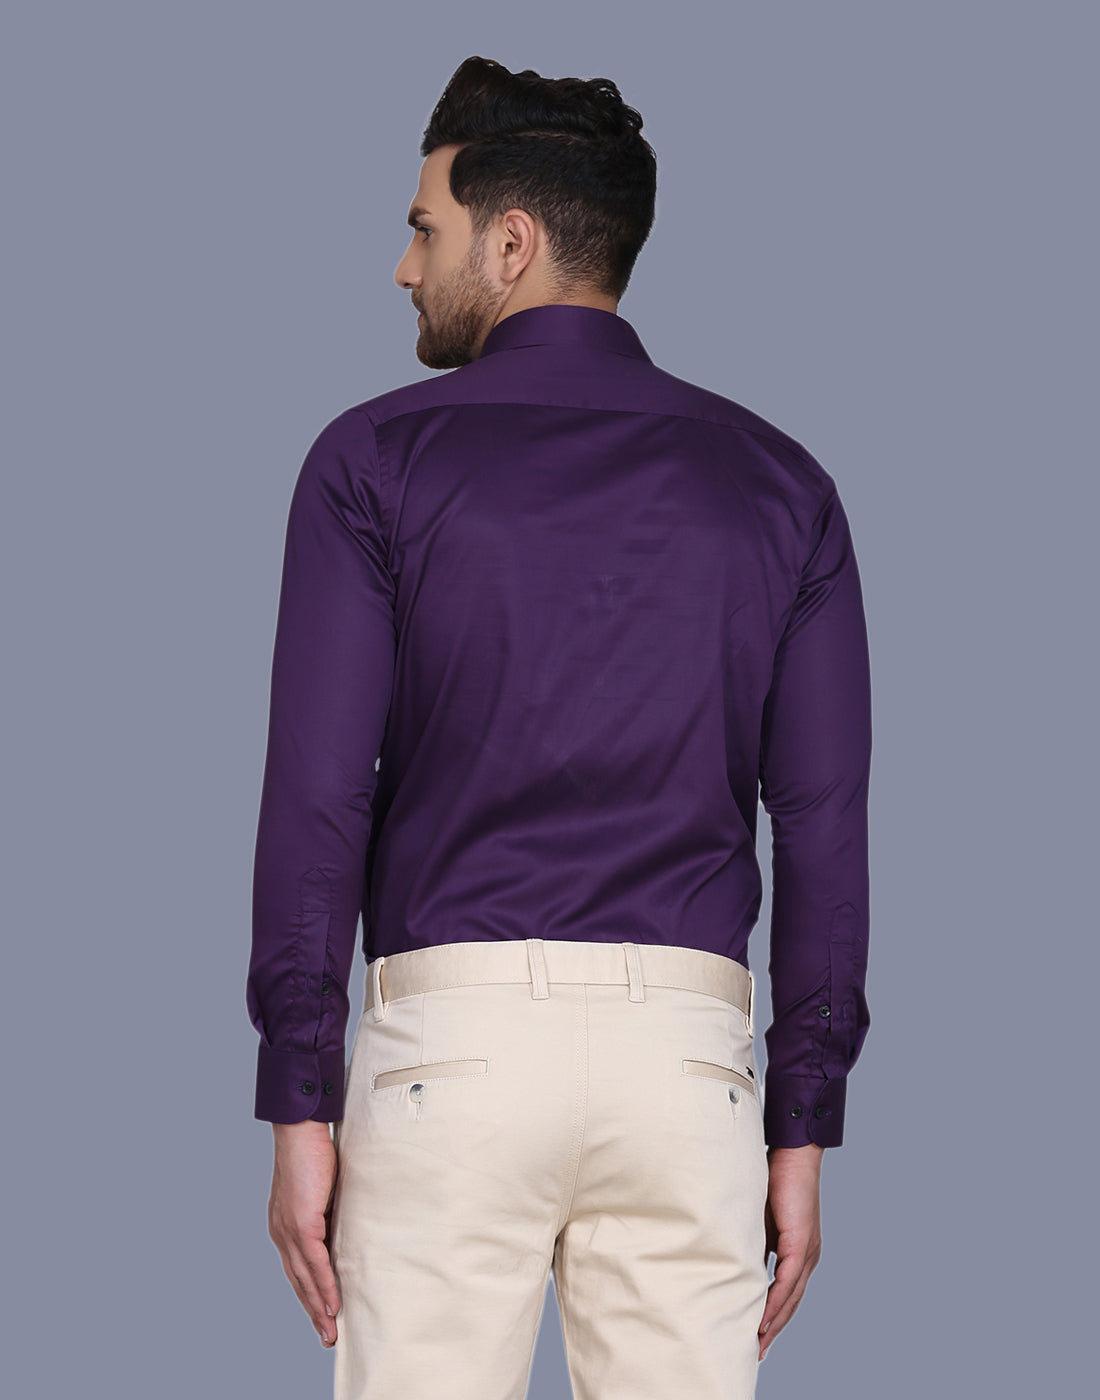 Purple Cotton Satin Men's Shirt